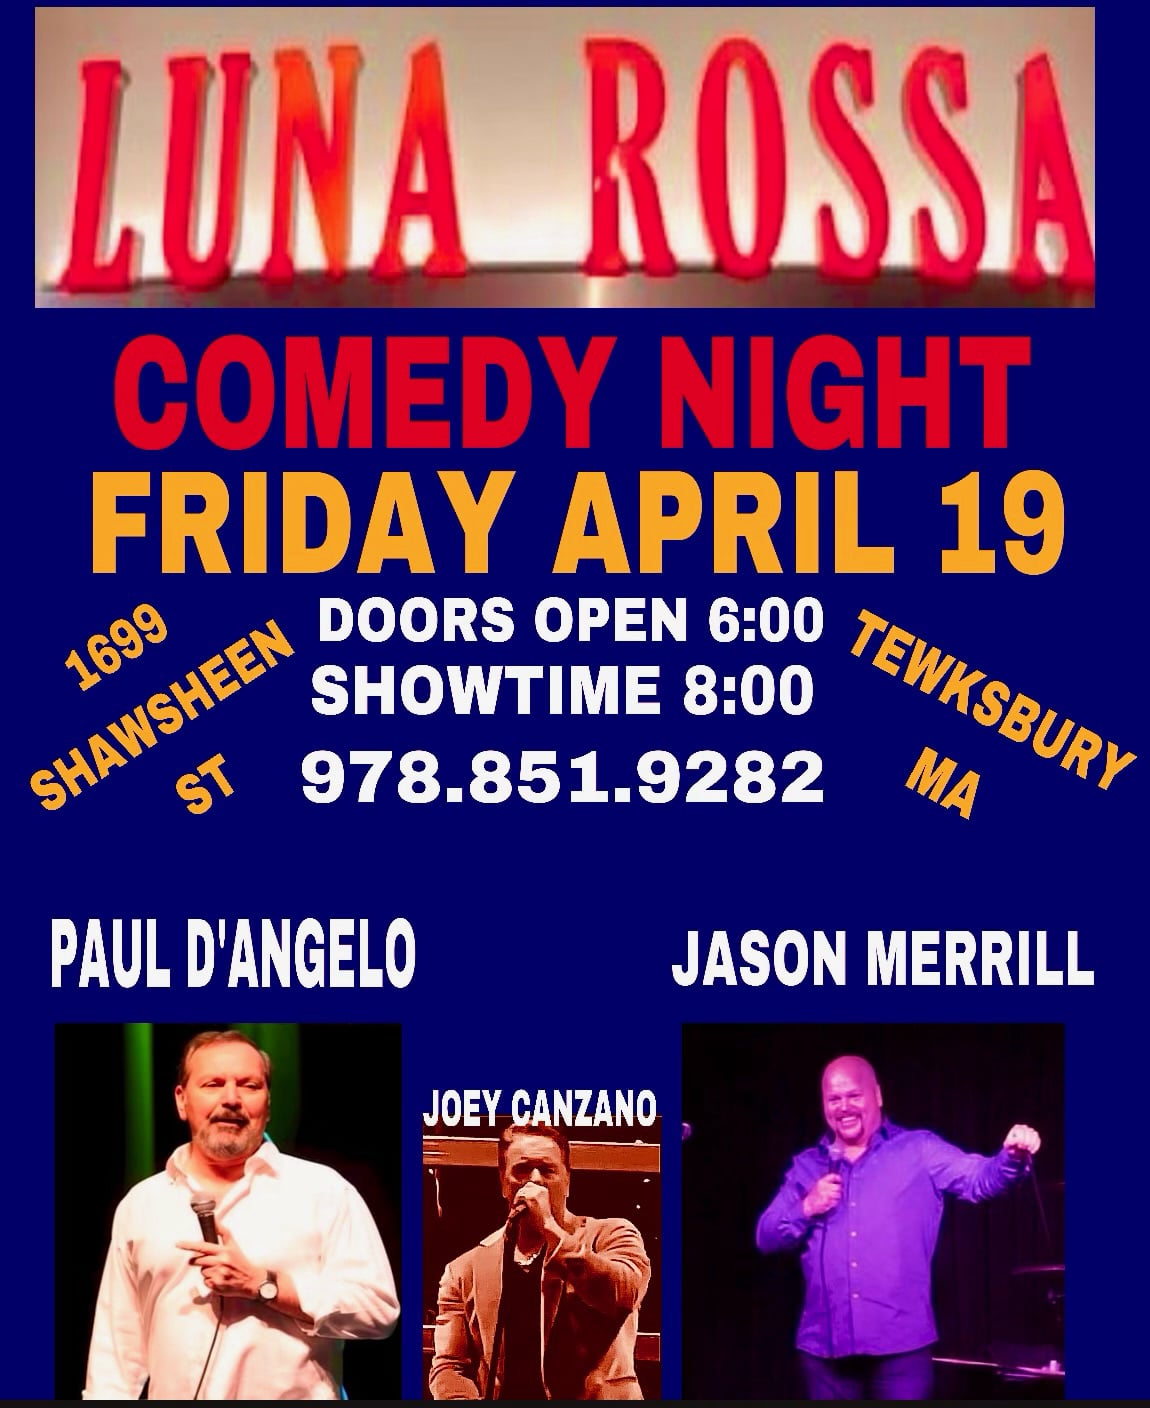 Comedy Night at Luna Rossa!